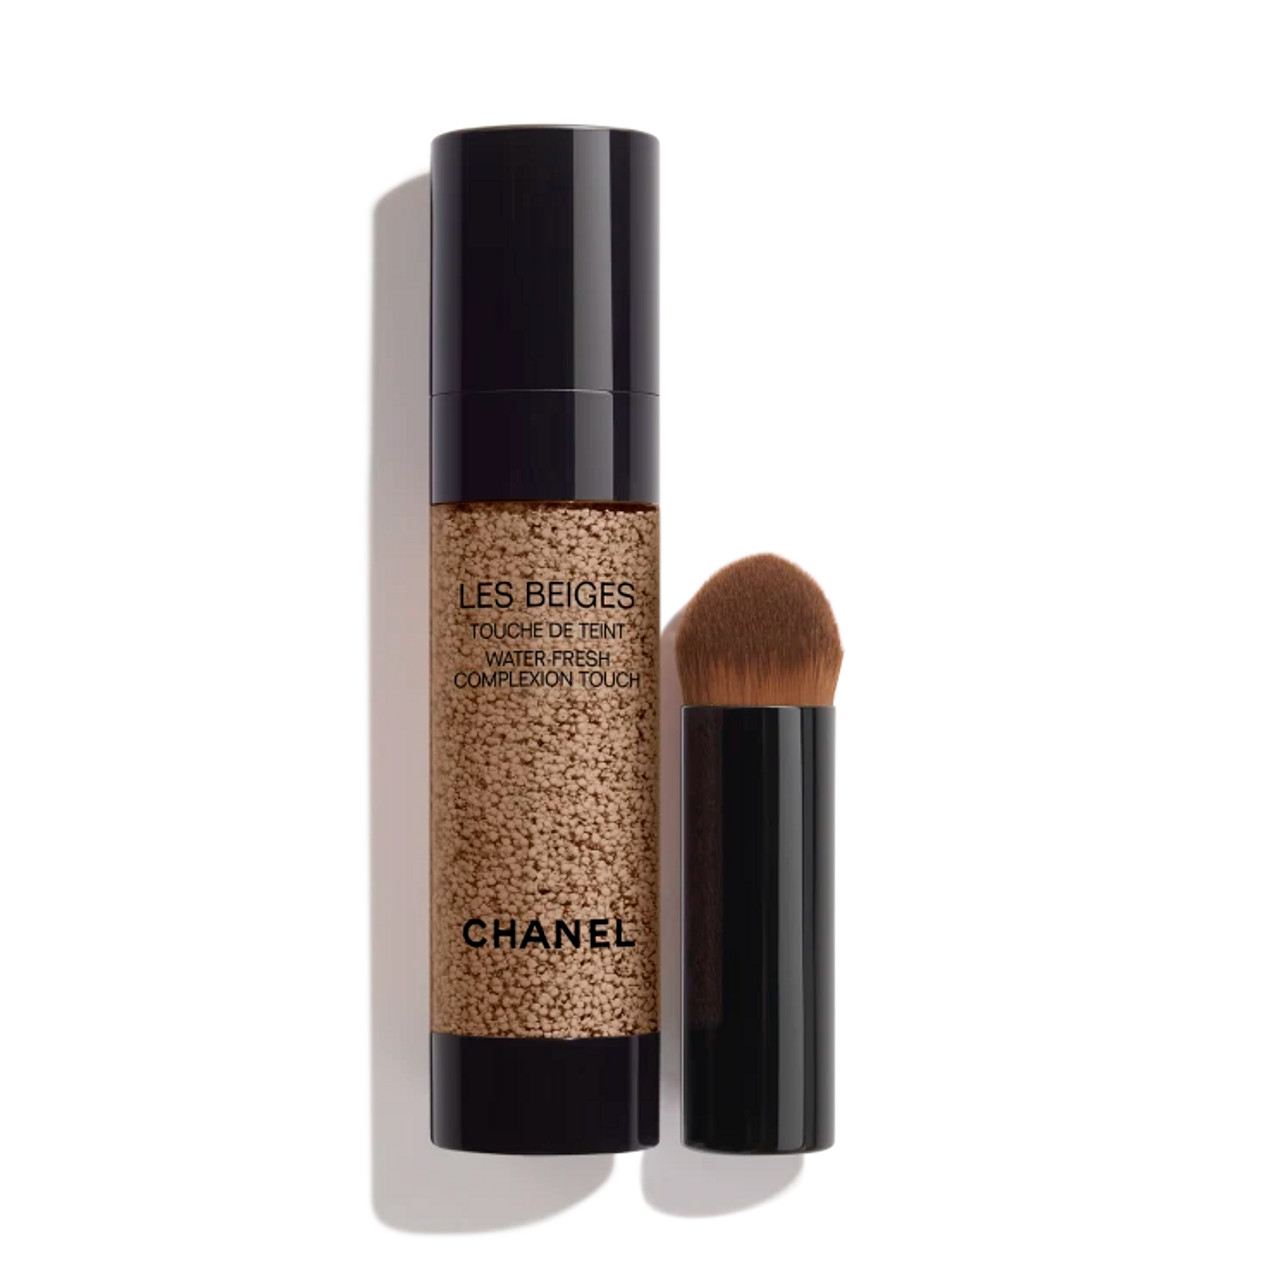 make-up-and-skin-care faces Chanel Les Beiges Touche De Teint Water-Fresh  Compelxion - B30 Faces